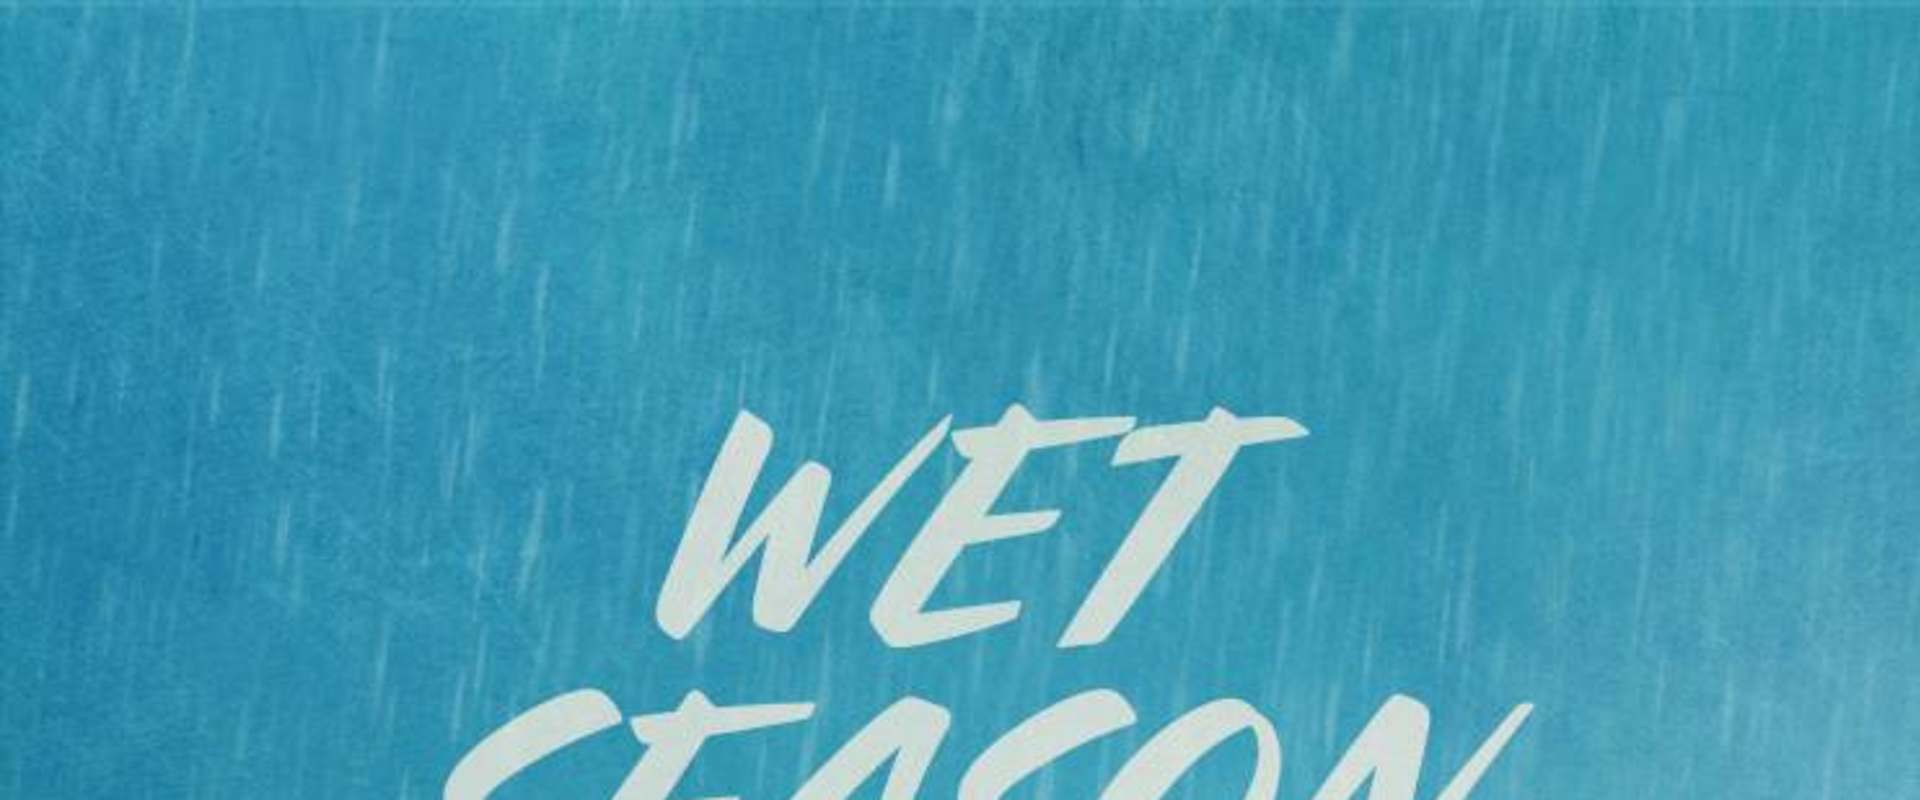 Wet Season background 2